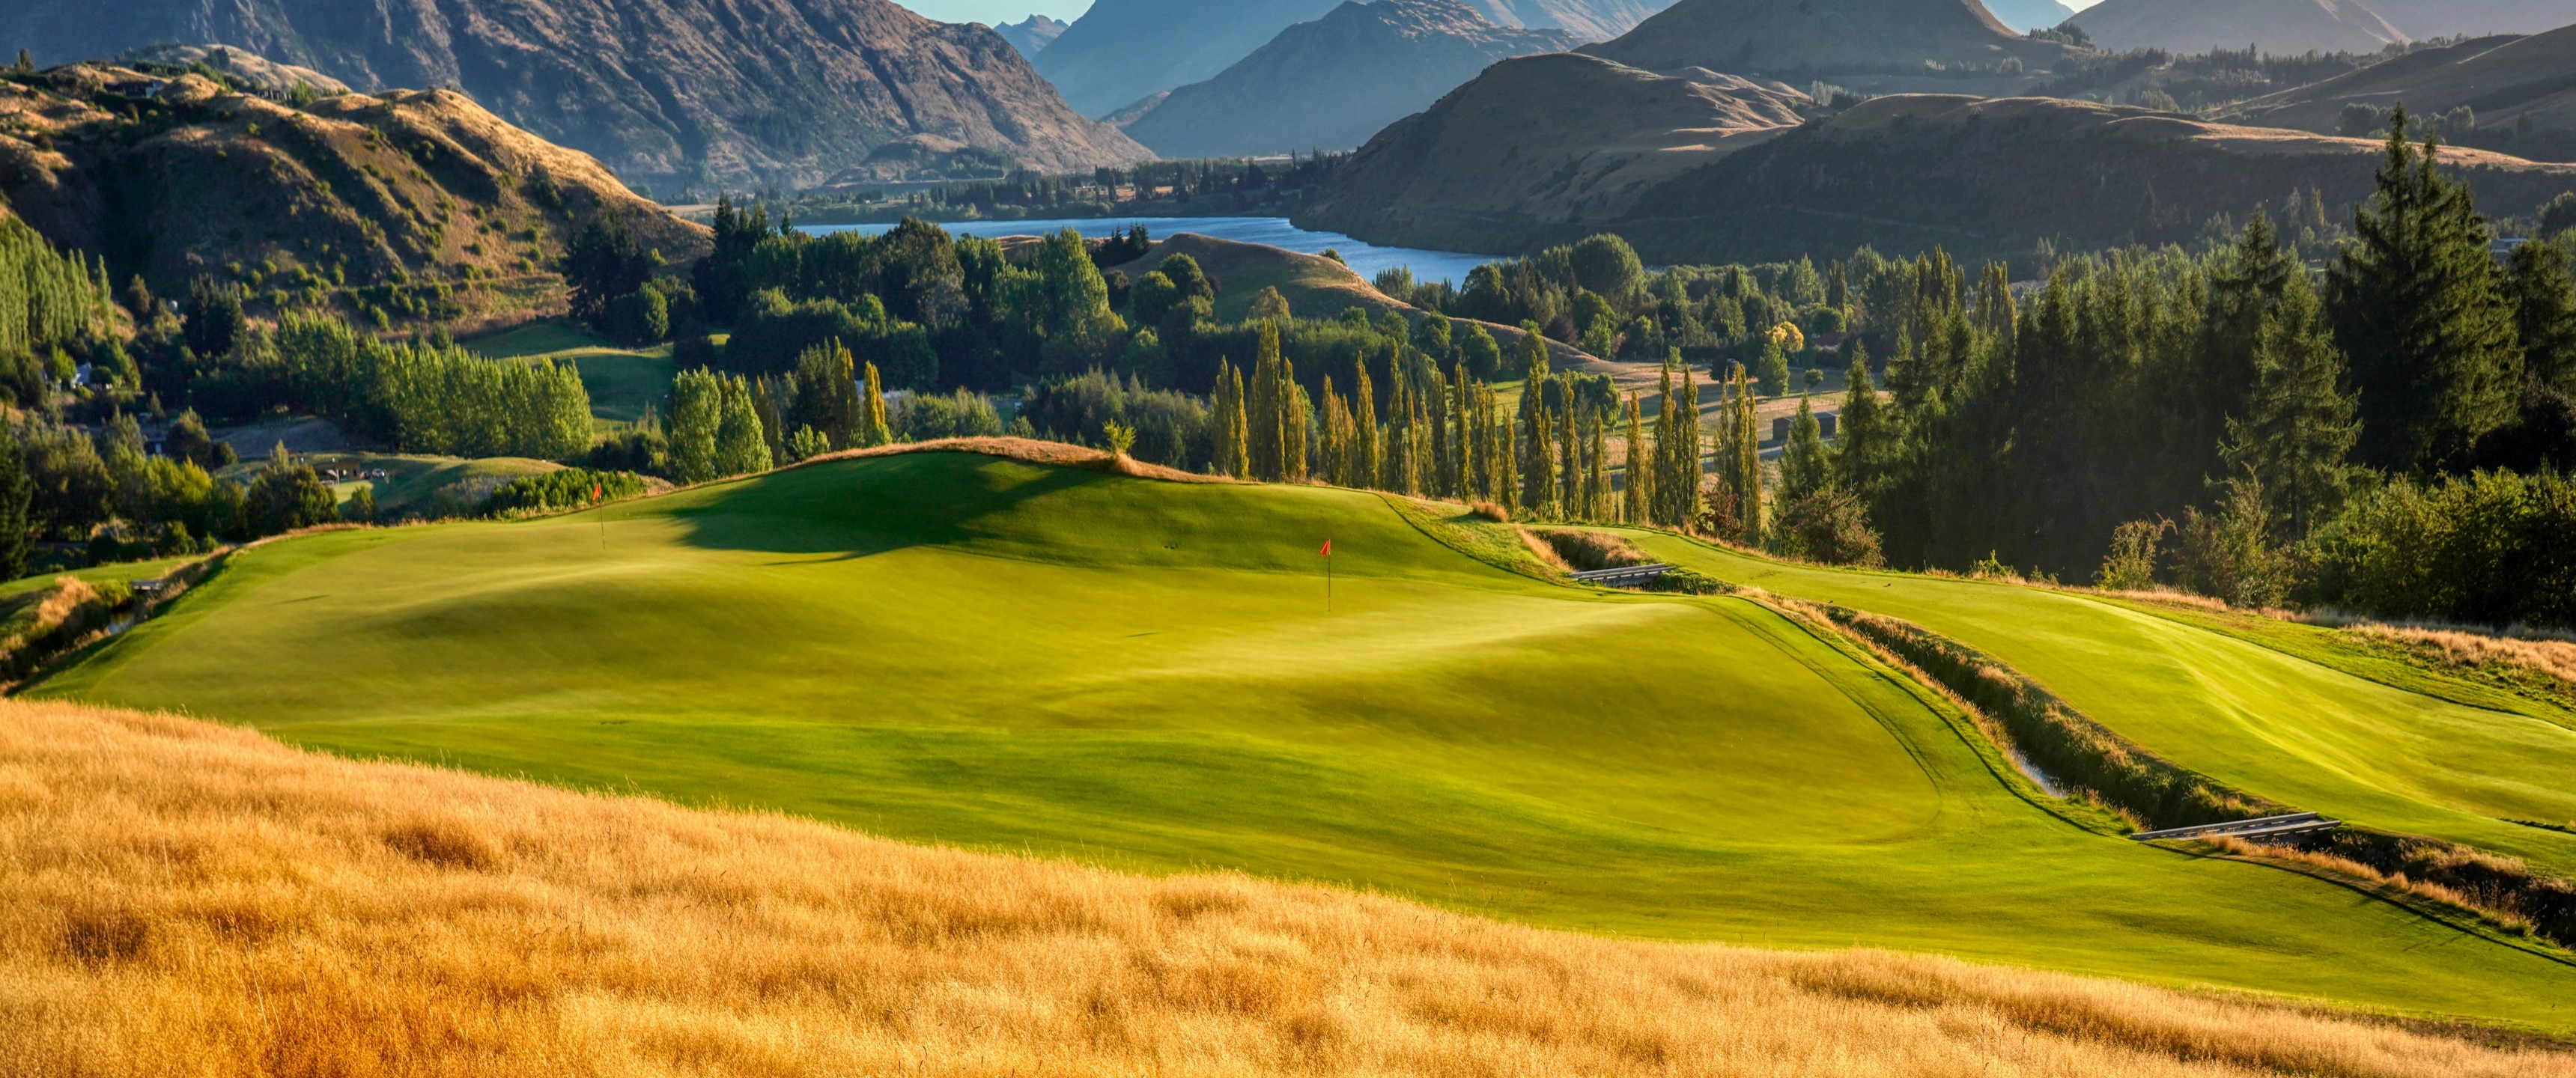 Golf Course: Landscape, Mountains, Lake, Par 3, Green, Nature, Eagle, Kikuyu, Grass, Trees. 3440x1440 Dual Screen Wallpaper.